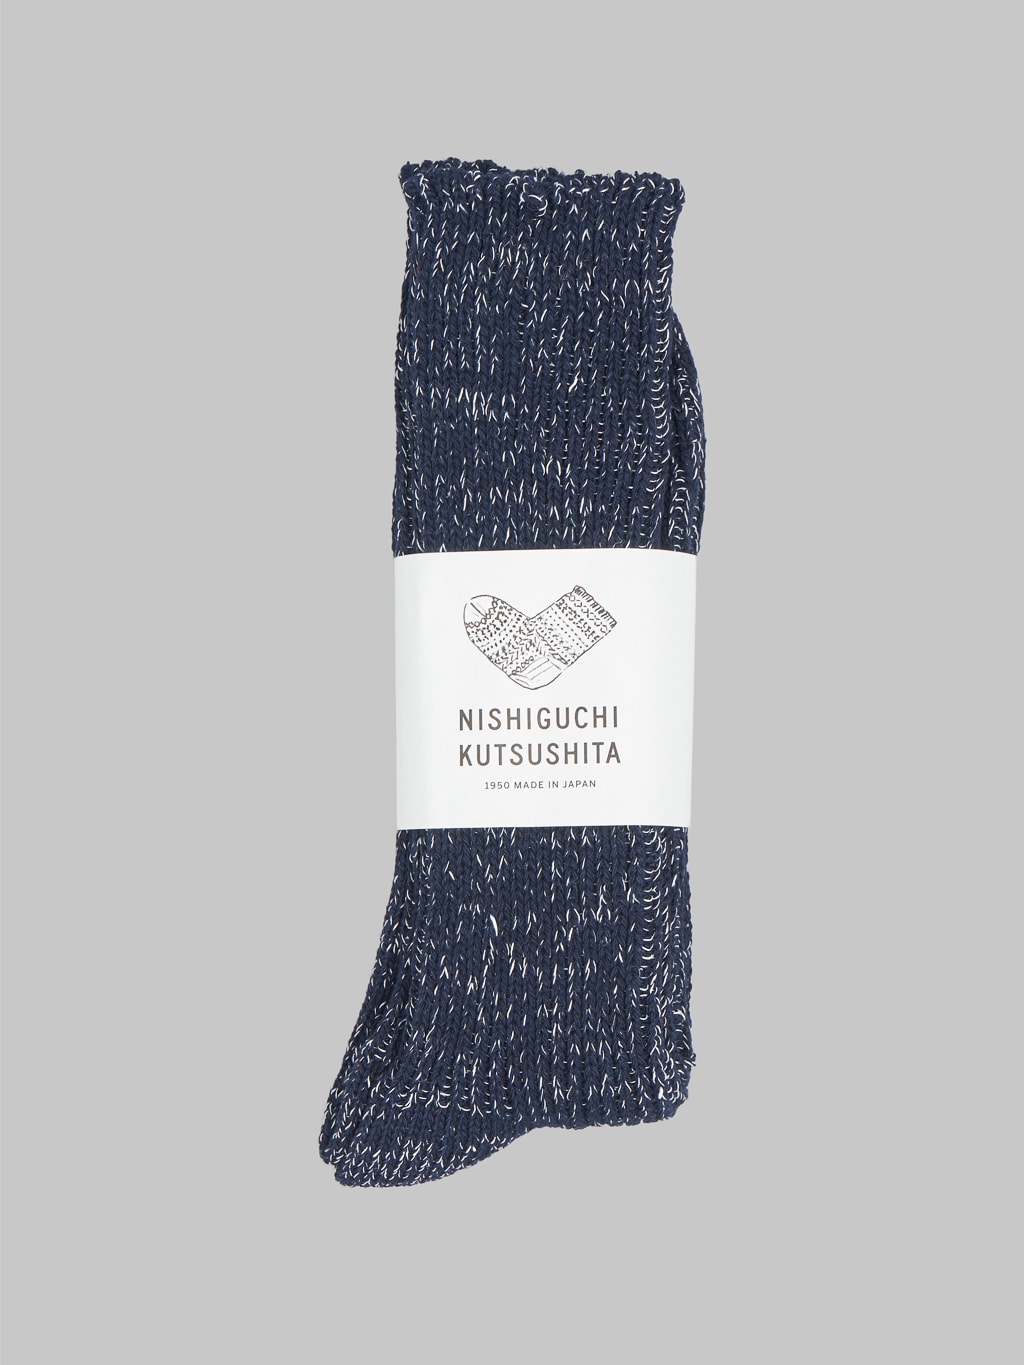 Nishiguchi Kutsushita Hemp Cotton Socks Midnight Japan Made